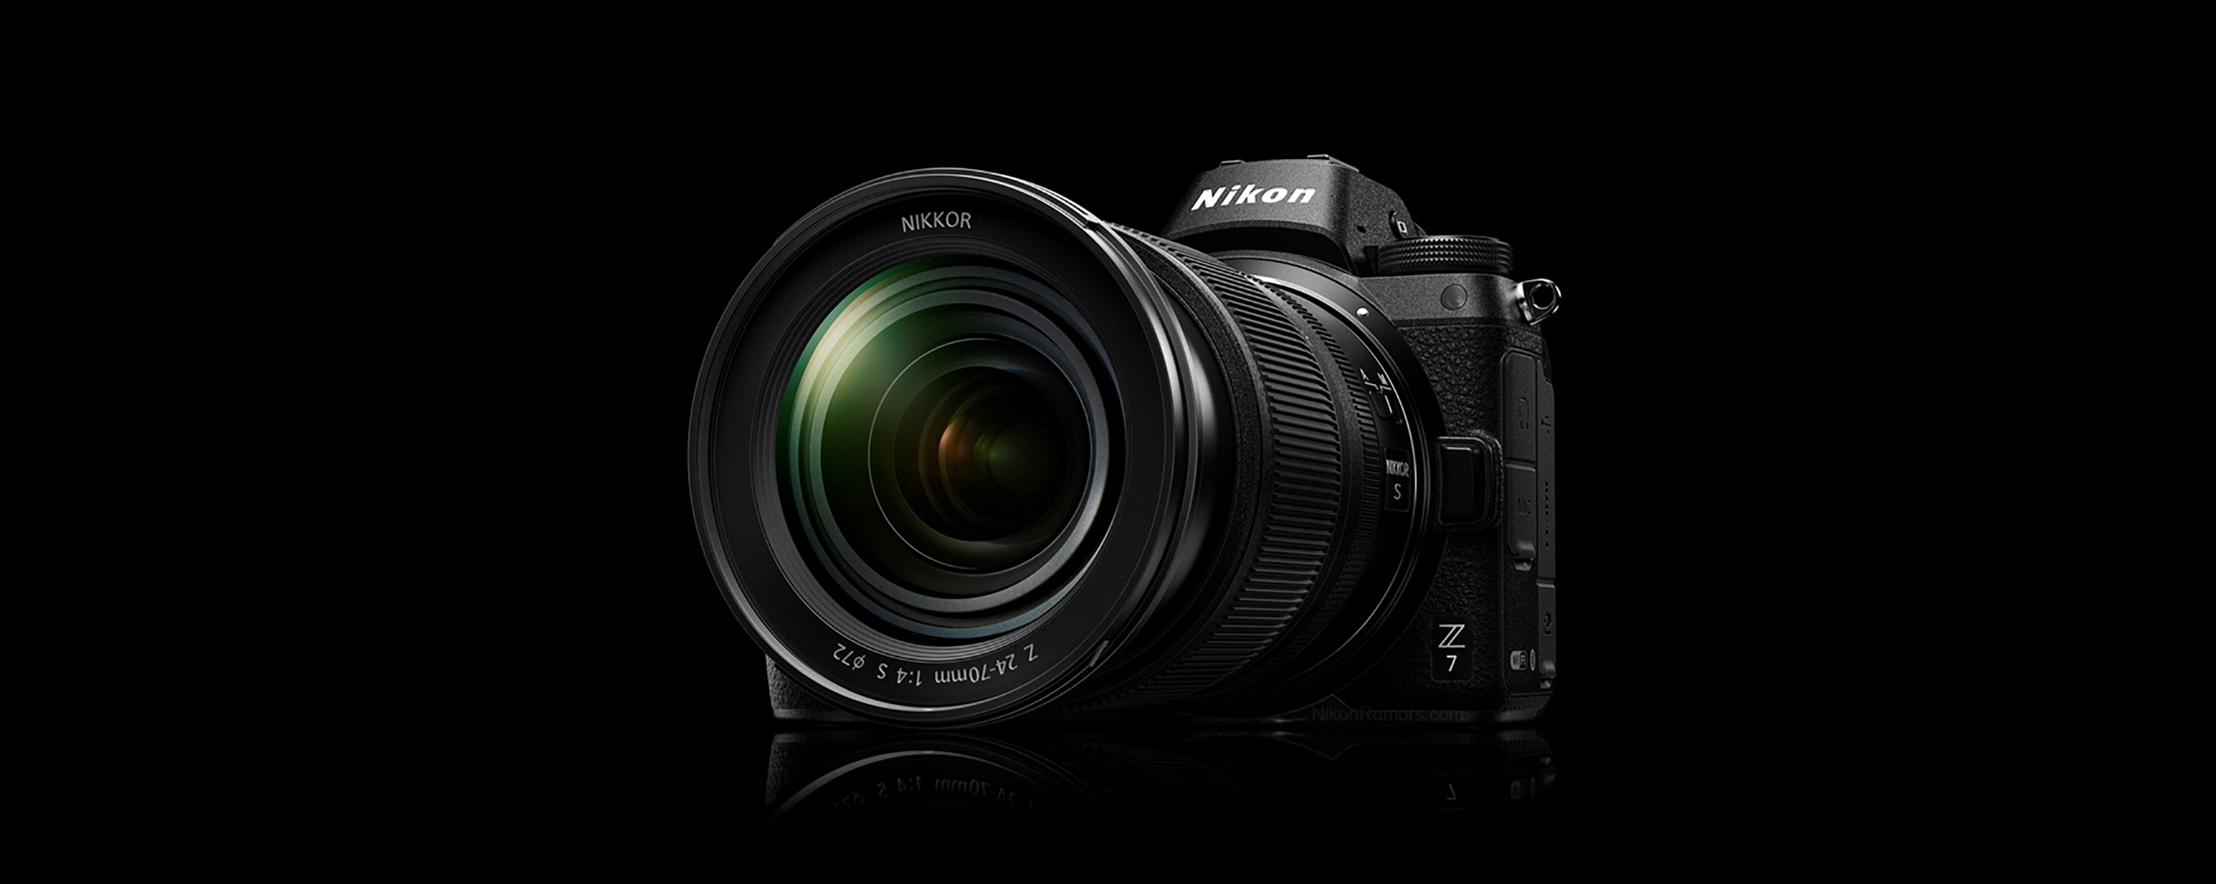 Nikon-Z7-mirrorless-camera.jpg